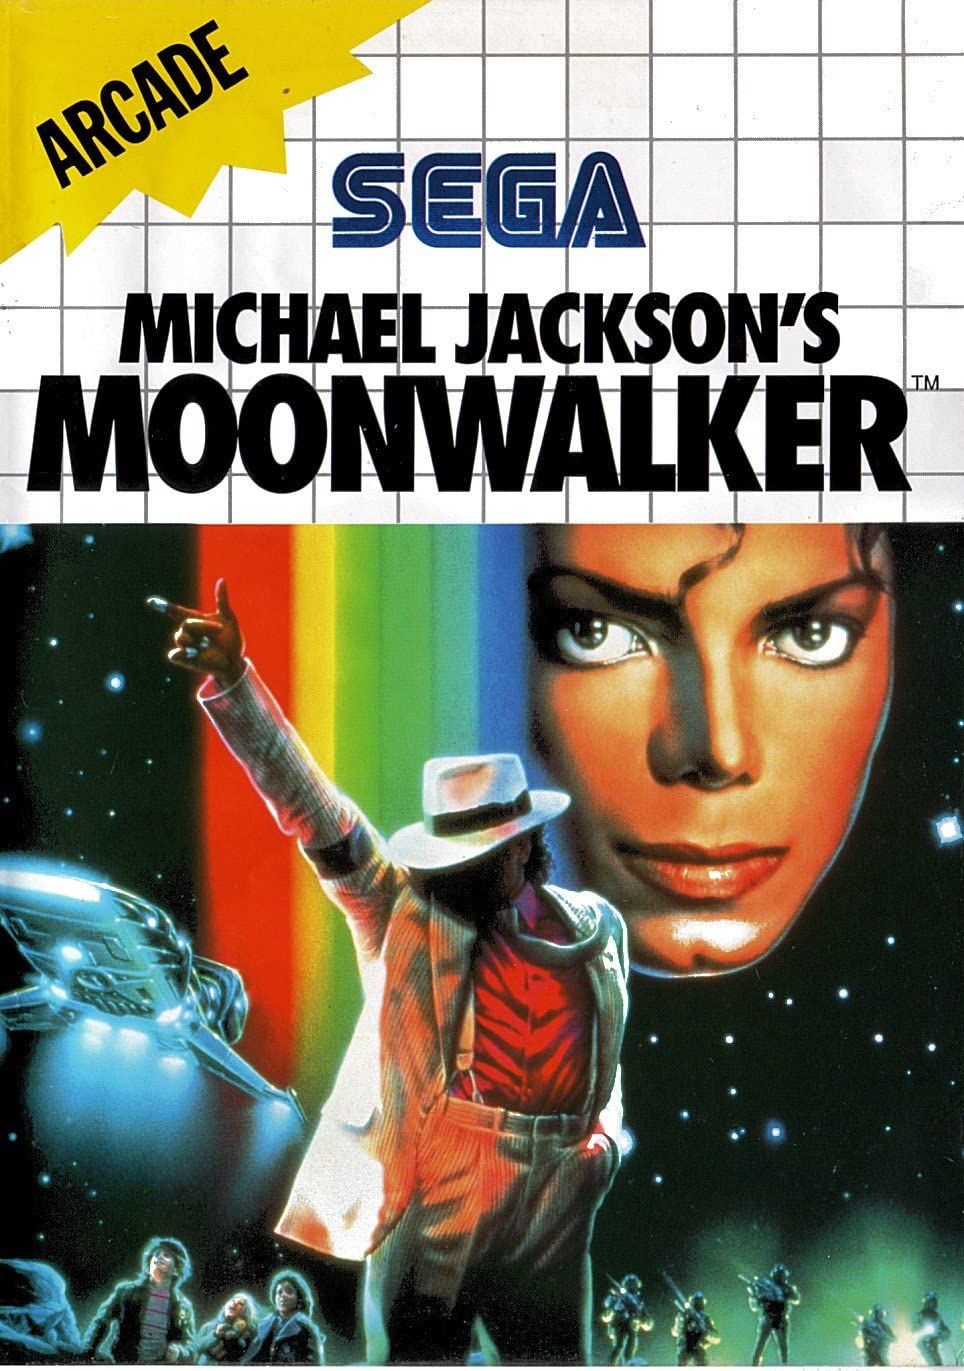 Michael jackson moonwalker. Michael Jackson's Moonwalker. Michael Jackson Moonwalker Sega.